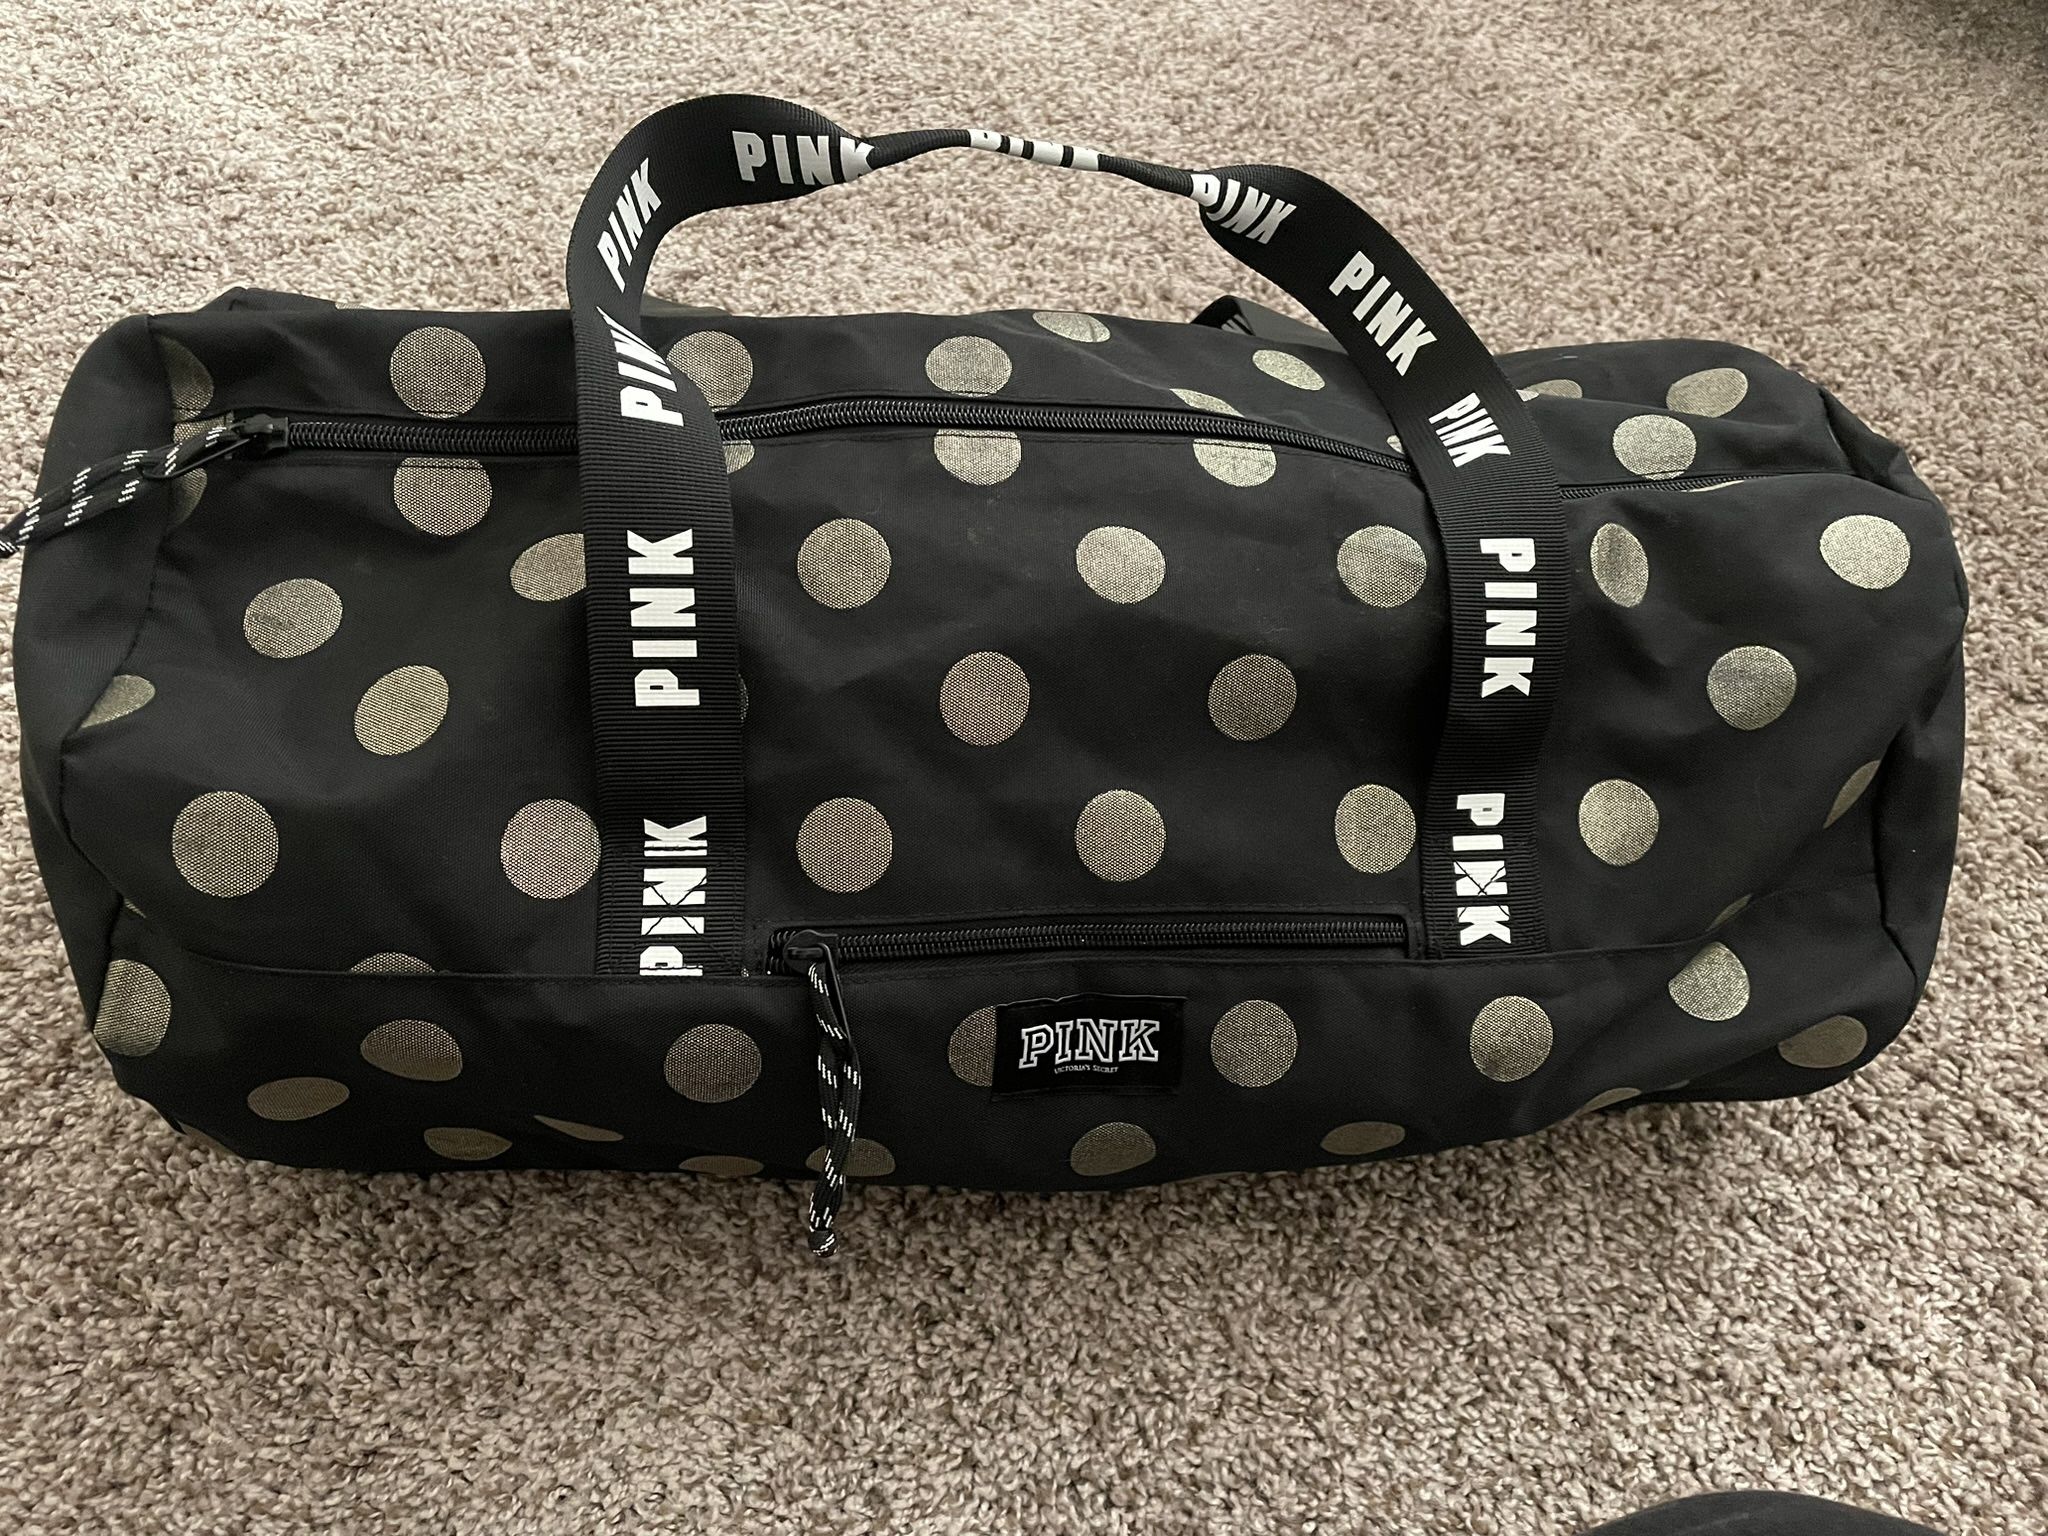 VSpink Duffle Bag 